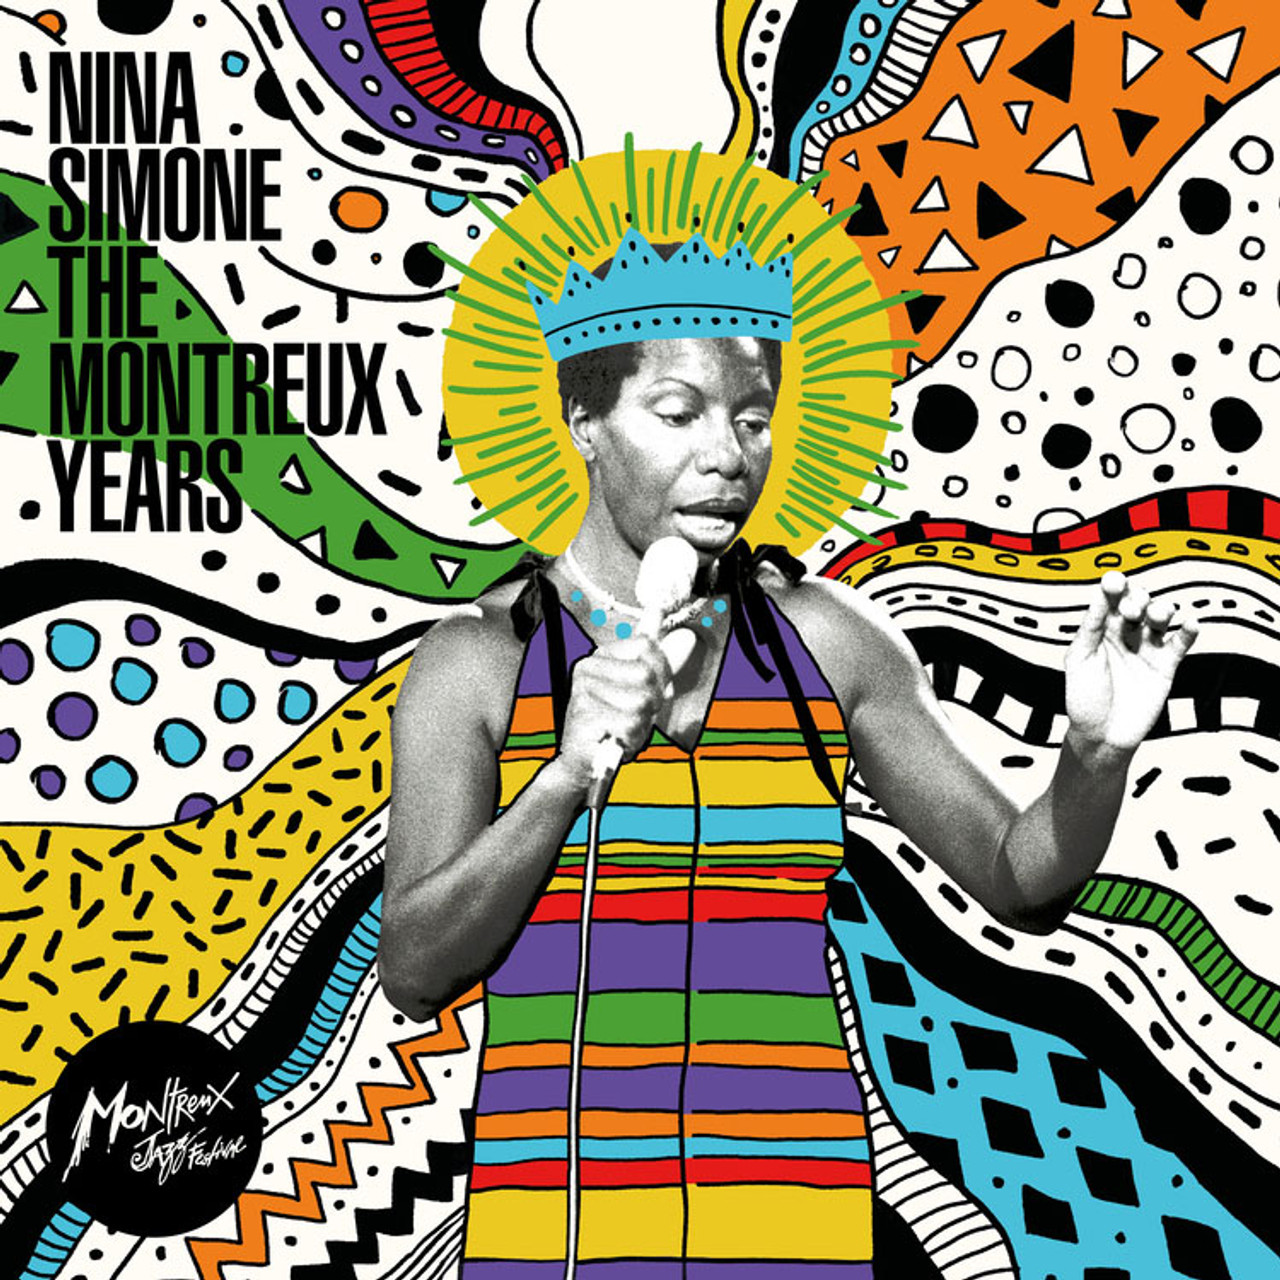 Nina Simone The Montreux Years 180g 2LP (Turquoise/Yellow & White Splatter  Vinyl)